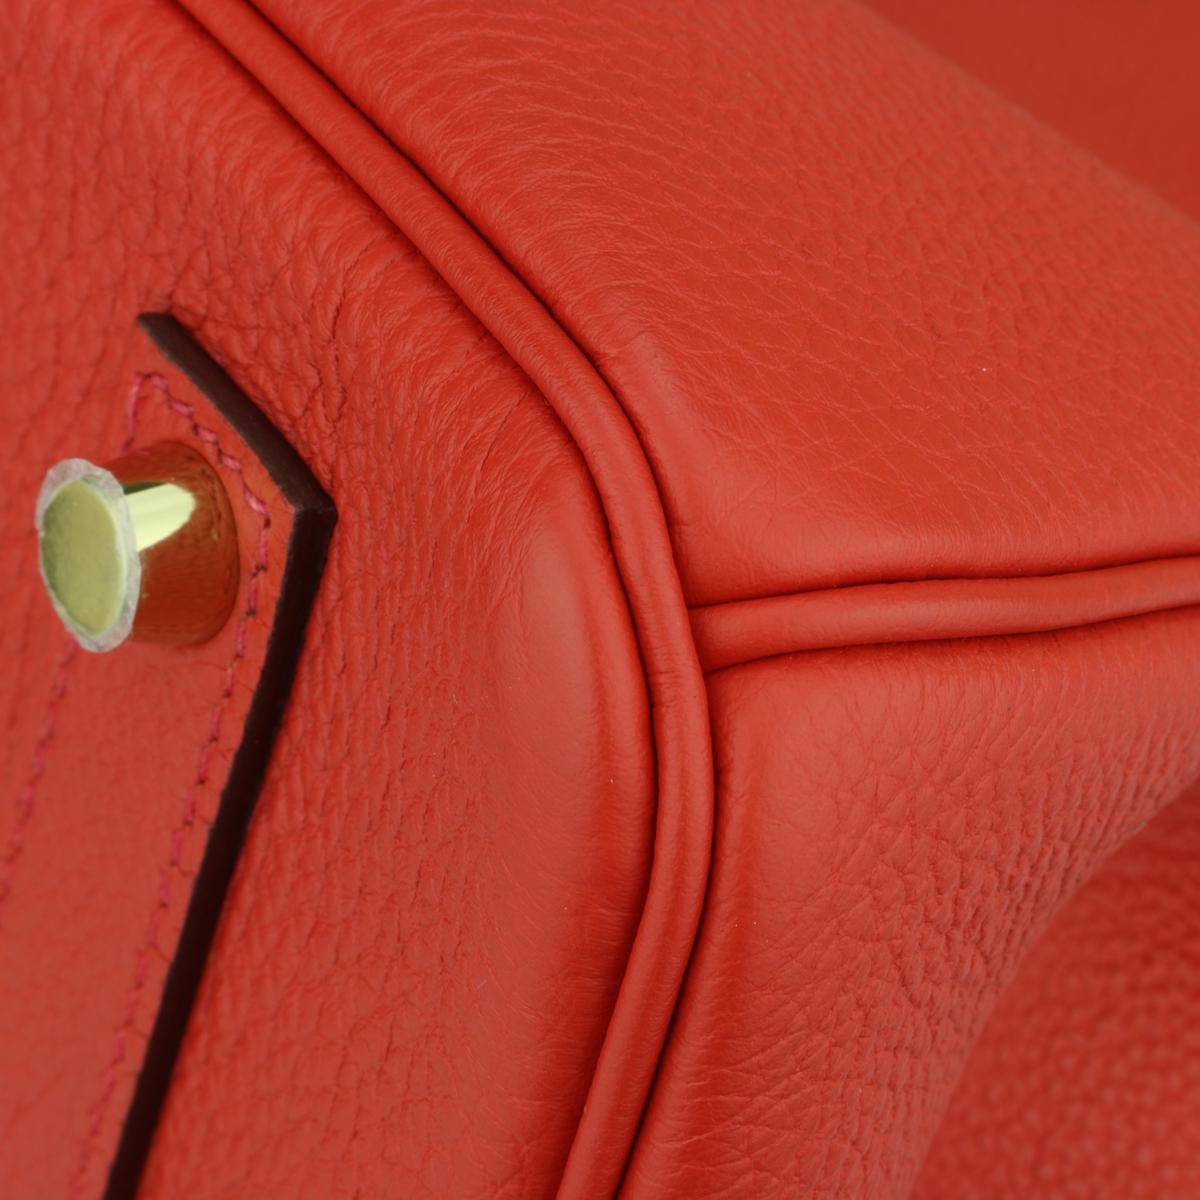 Hermès Birkin Bag 35cm Geranium Togo Leather with Gold Hardware Stamp A 2017 5